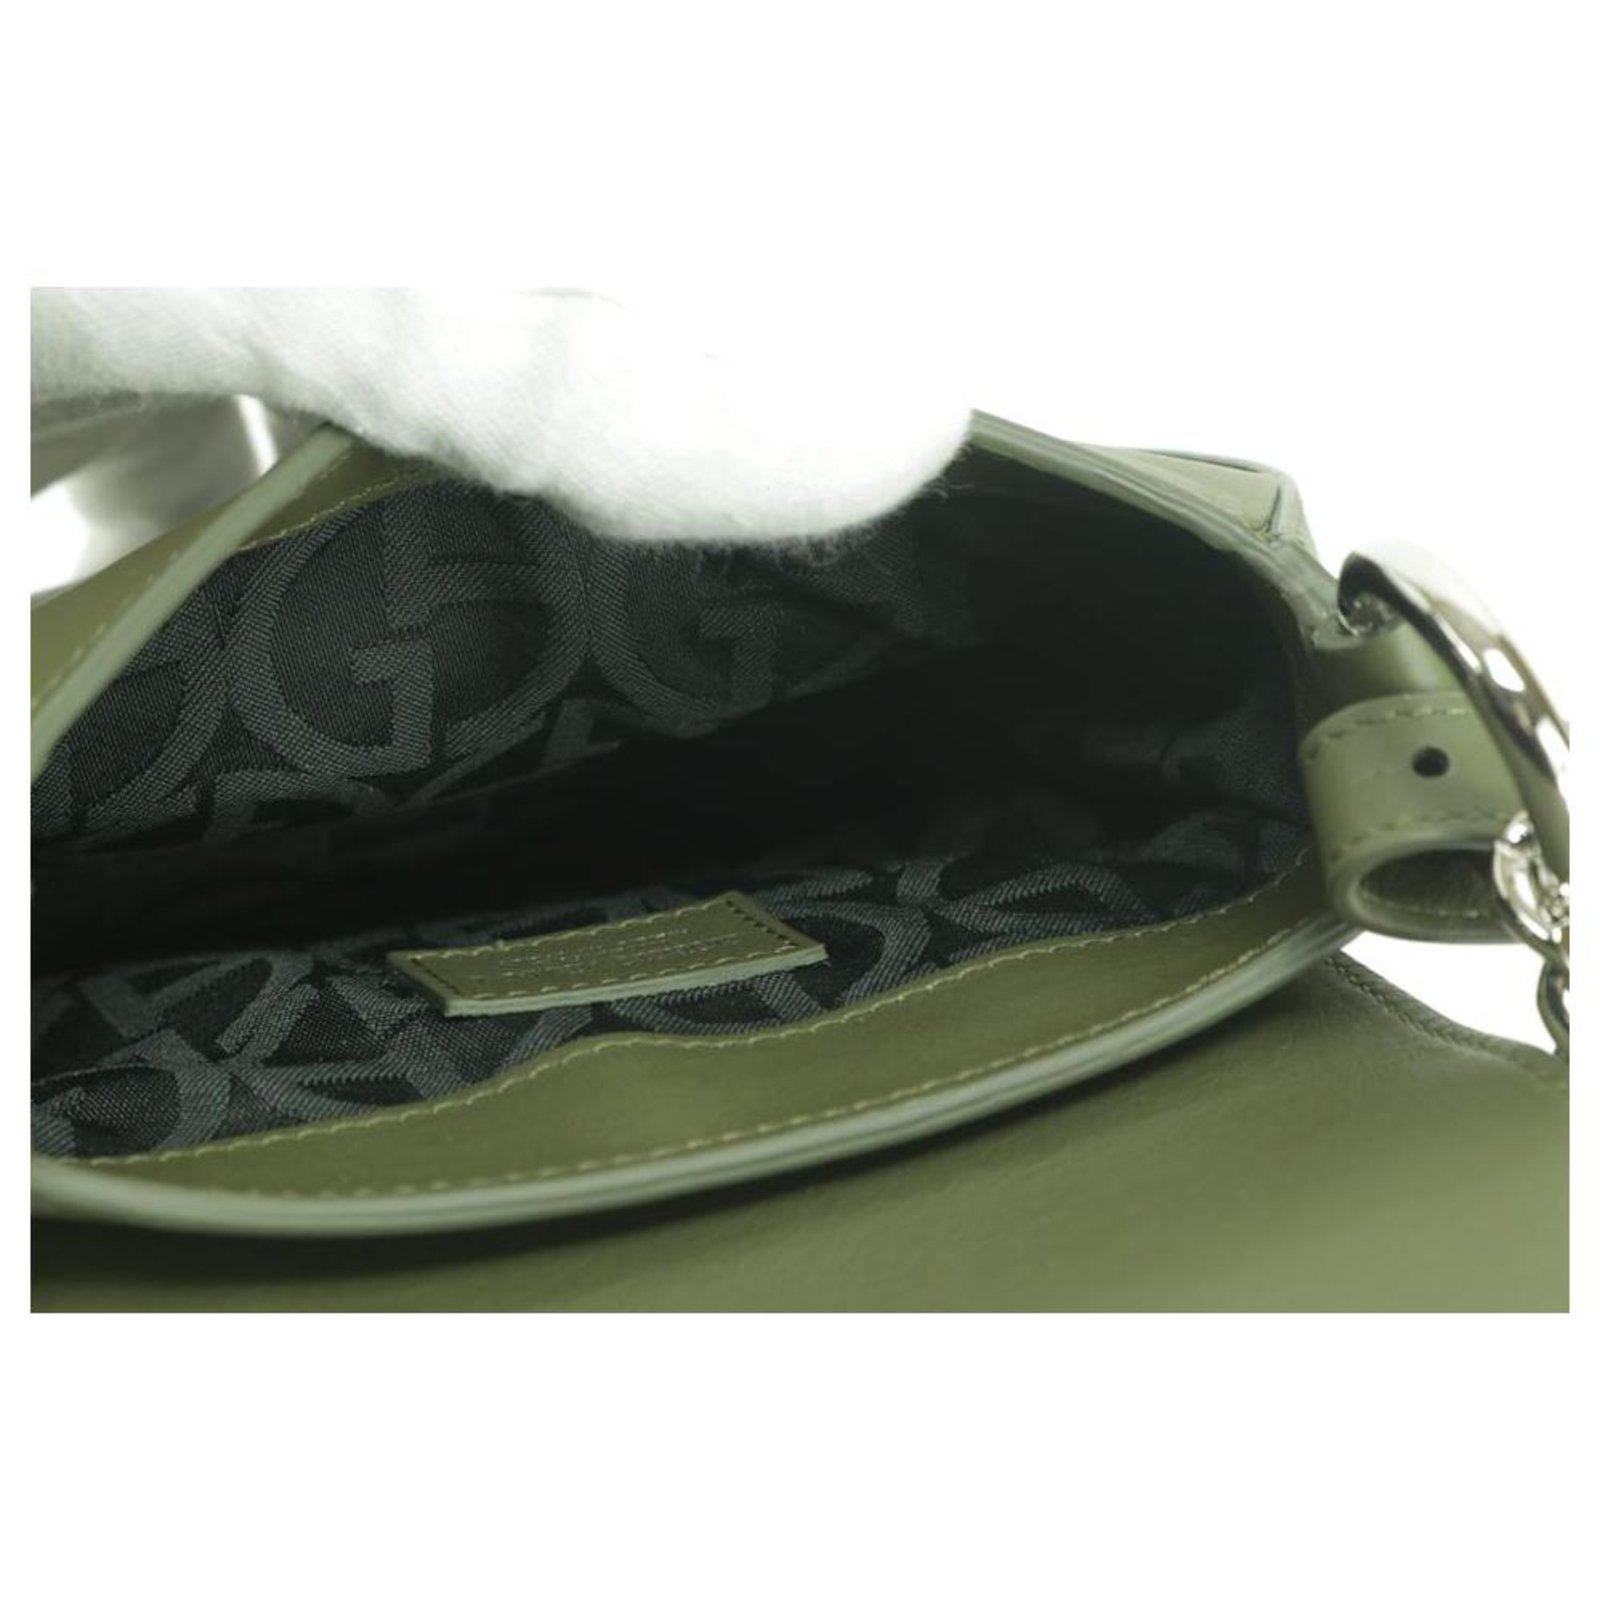 Giorgio Armani Logo Flap-Top Green Leather Crossbody Plastic ref